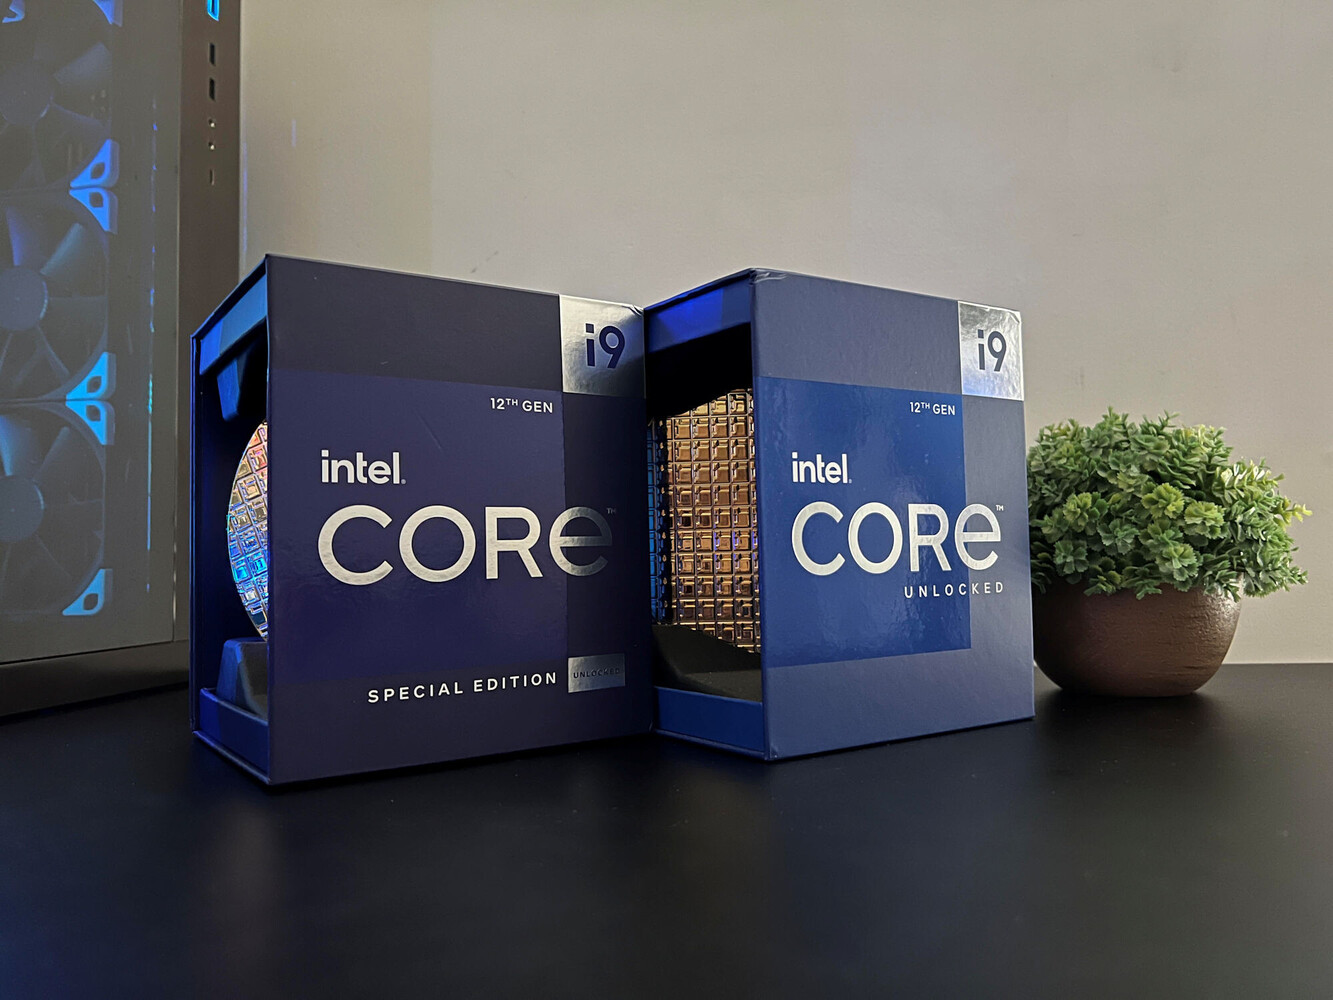 Intel Core i7-12700K Review: Taking the Shine Off Core i9